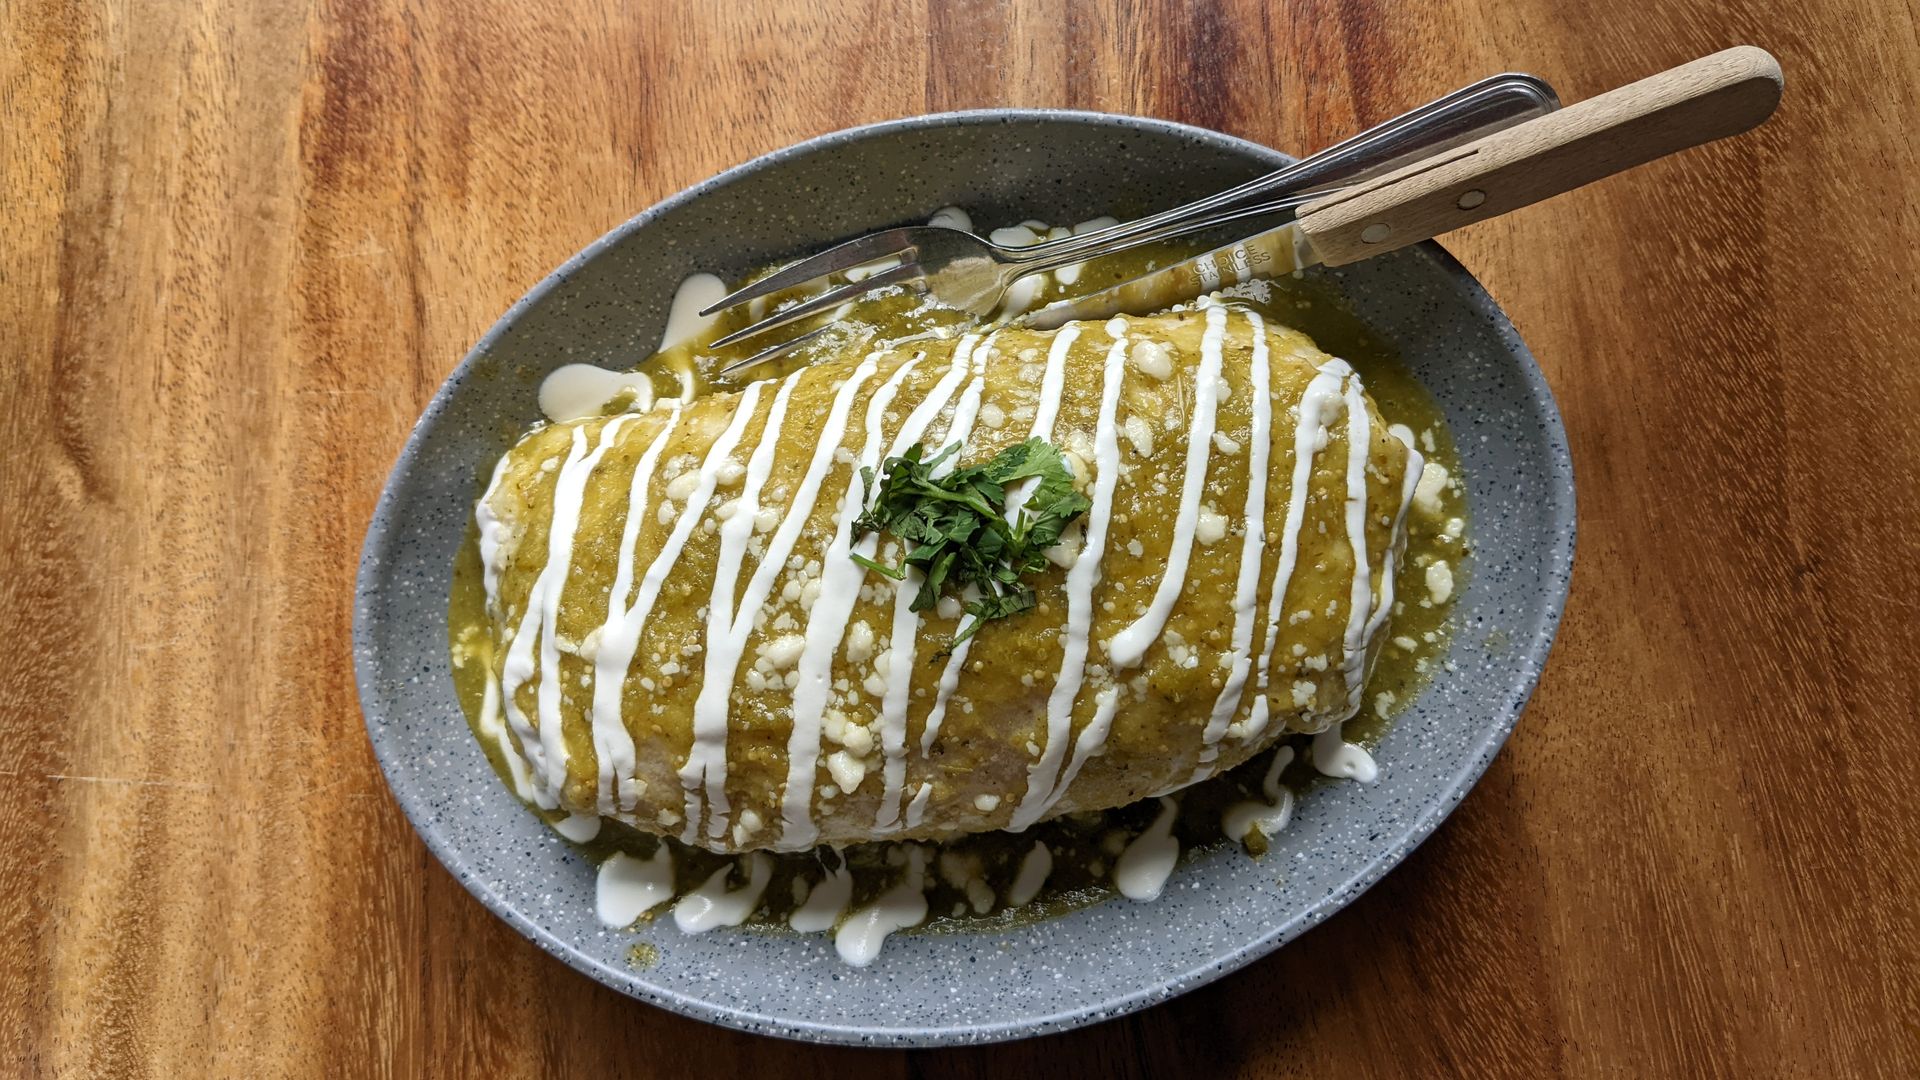 Burrito mojado with carnitas from El Purepecha